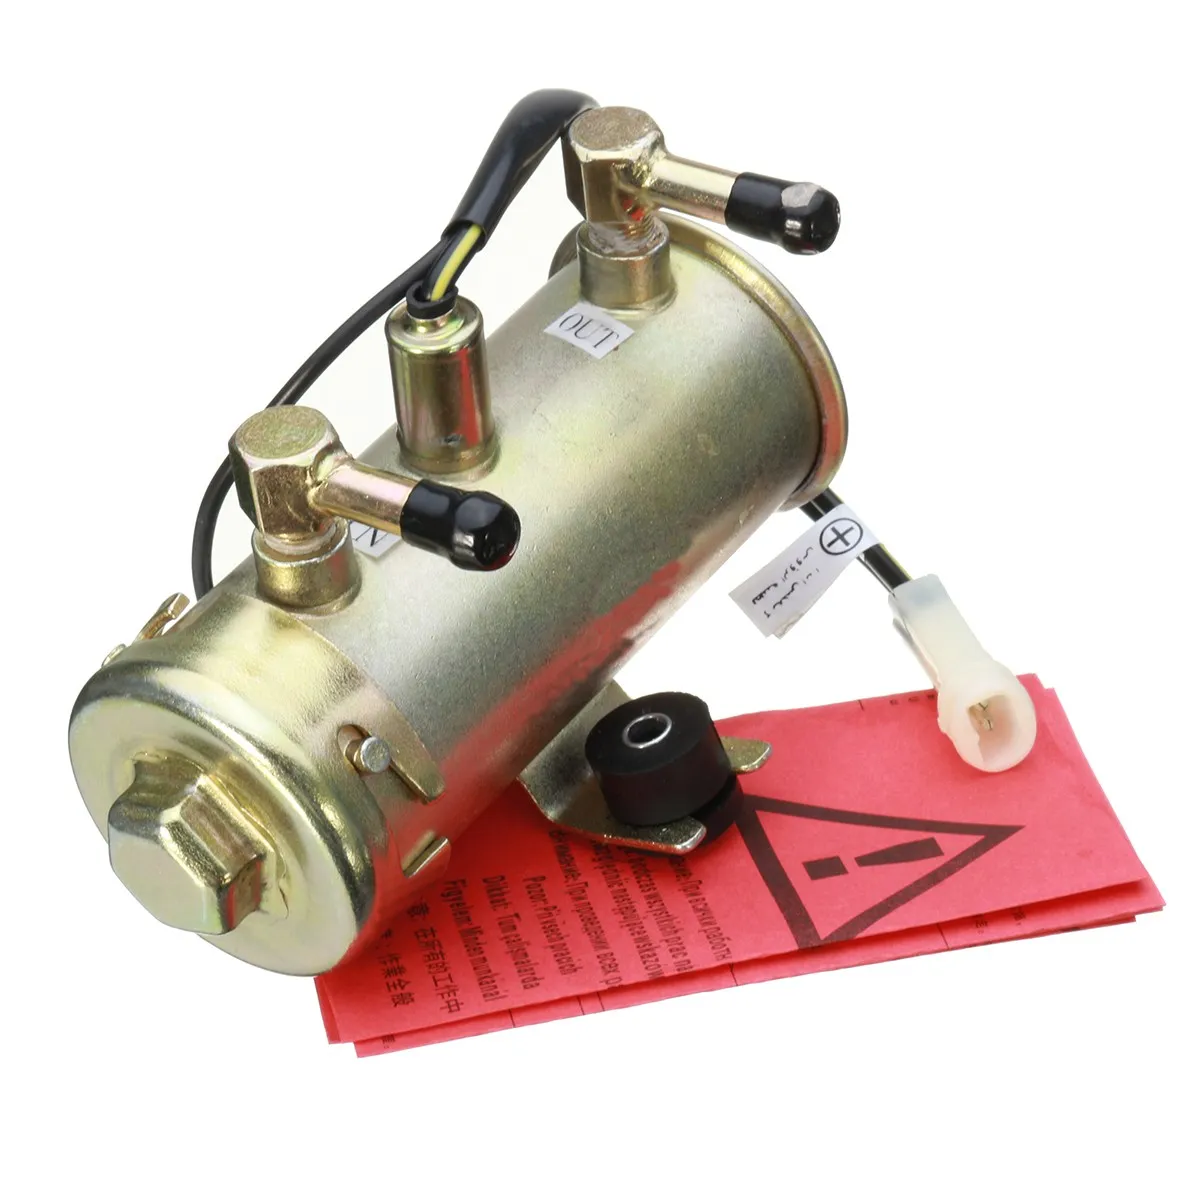 

Universal 12V Electric Fuel Gasoline Pump Kit Low Pressure HRF-027 for Petrol/Dieselc/Bio